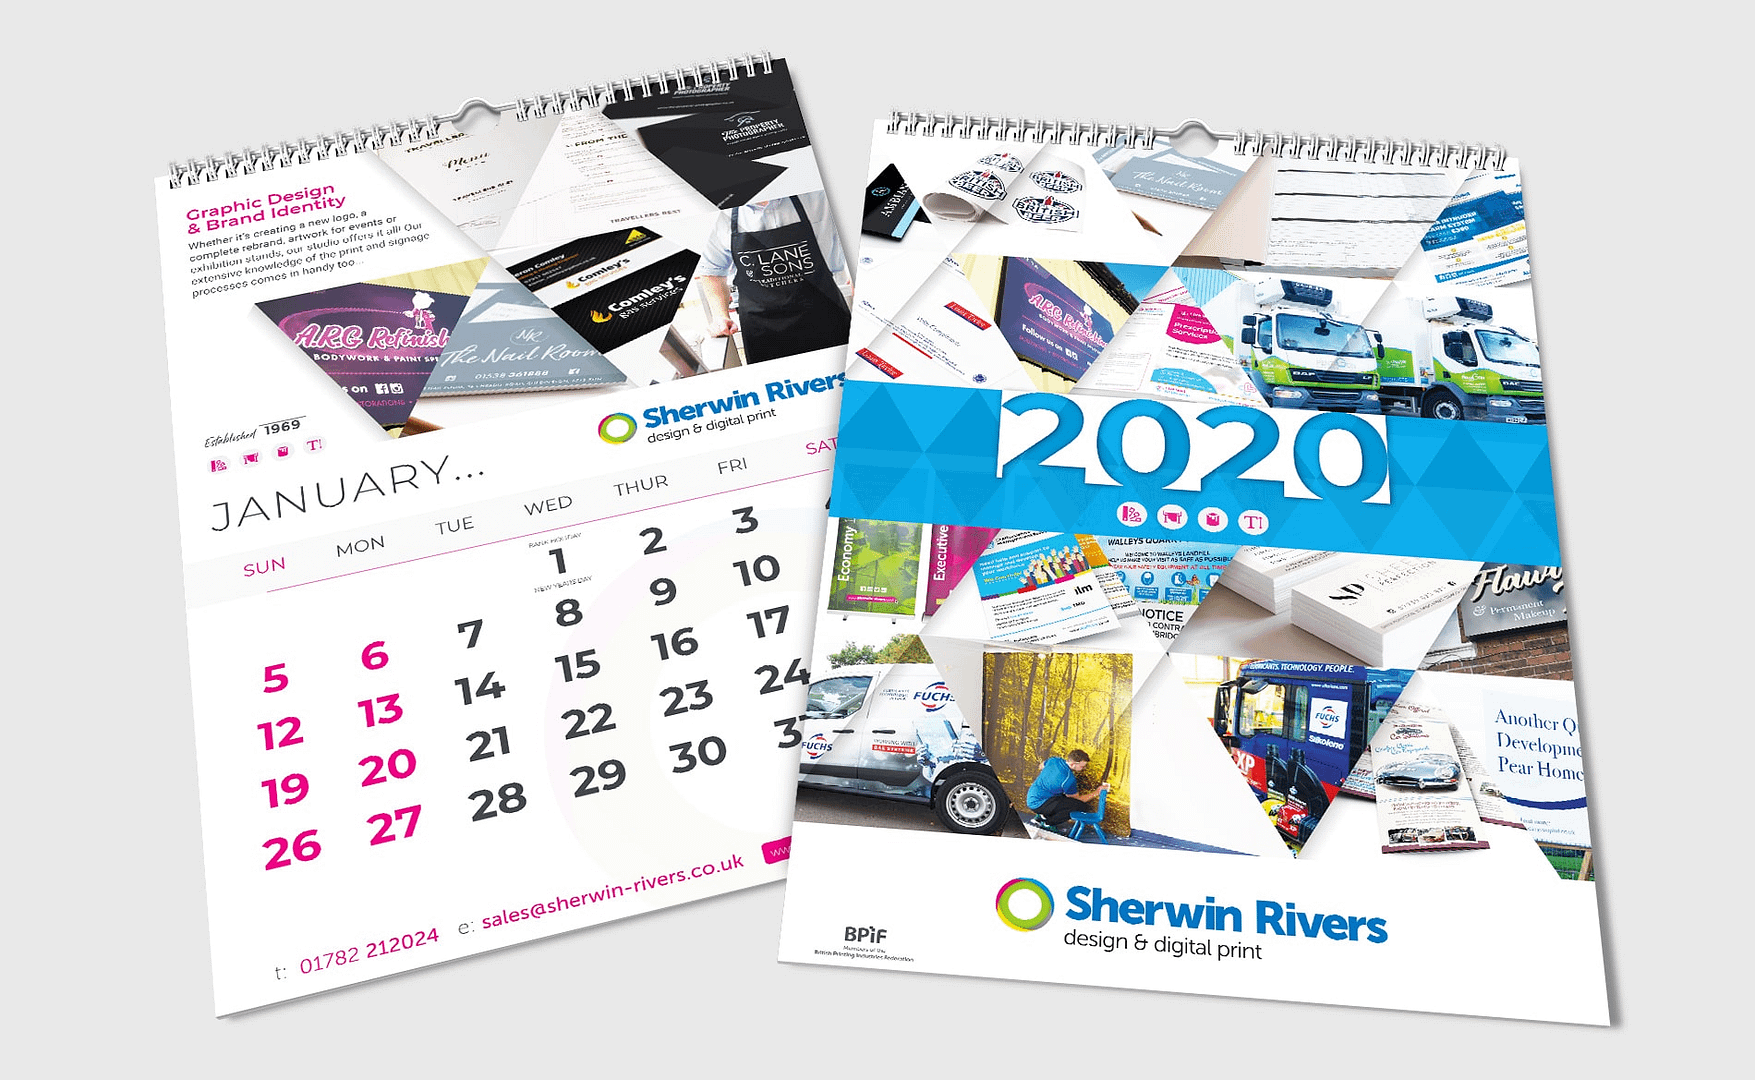 Sherwin Rivers Printers Ltd - Stoke-on-Trent, Staffordshire, 2020 Custom Business Calendar Printing